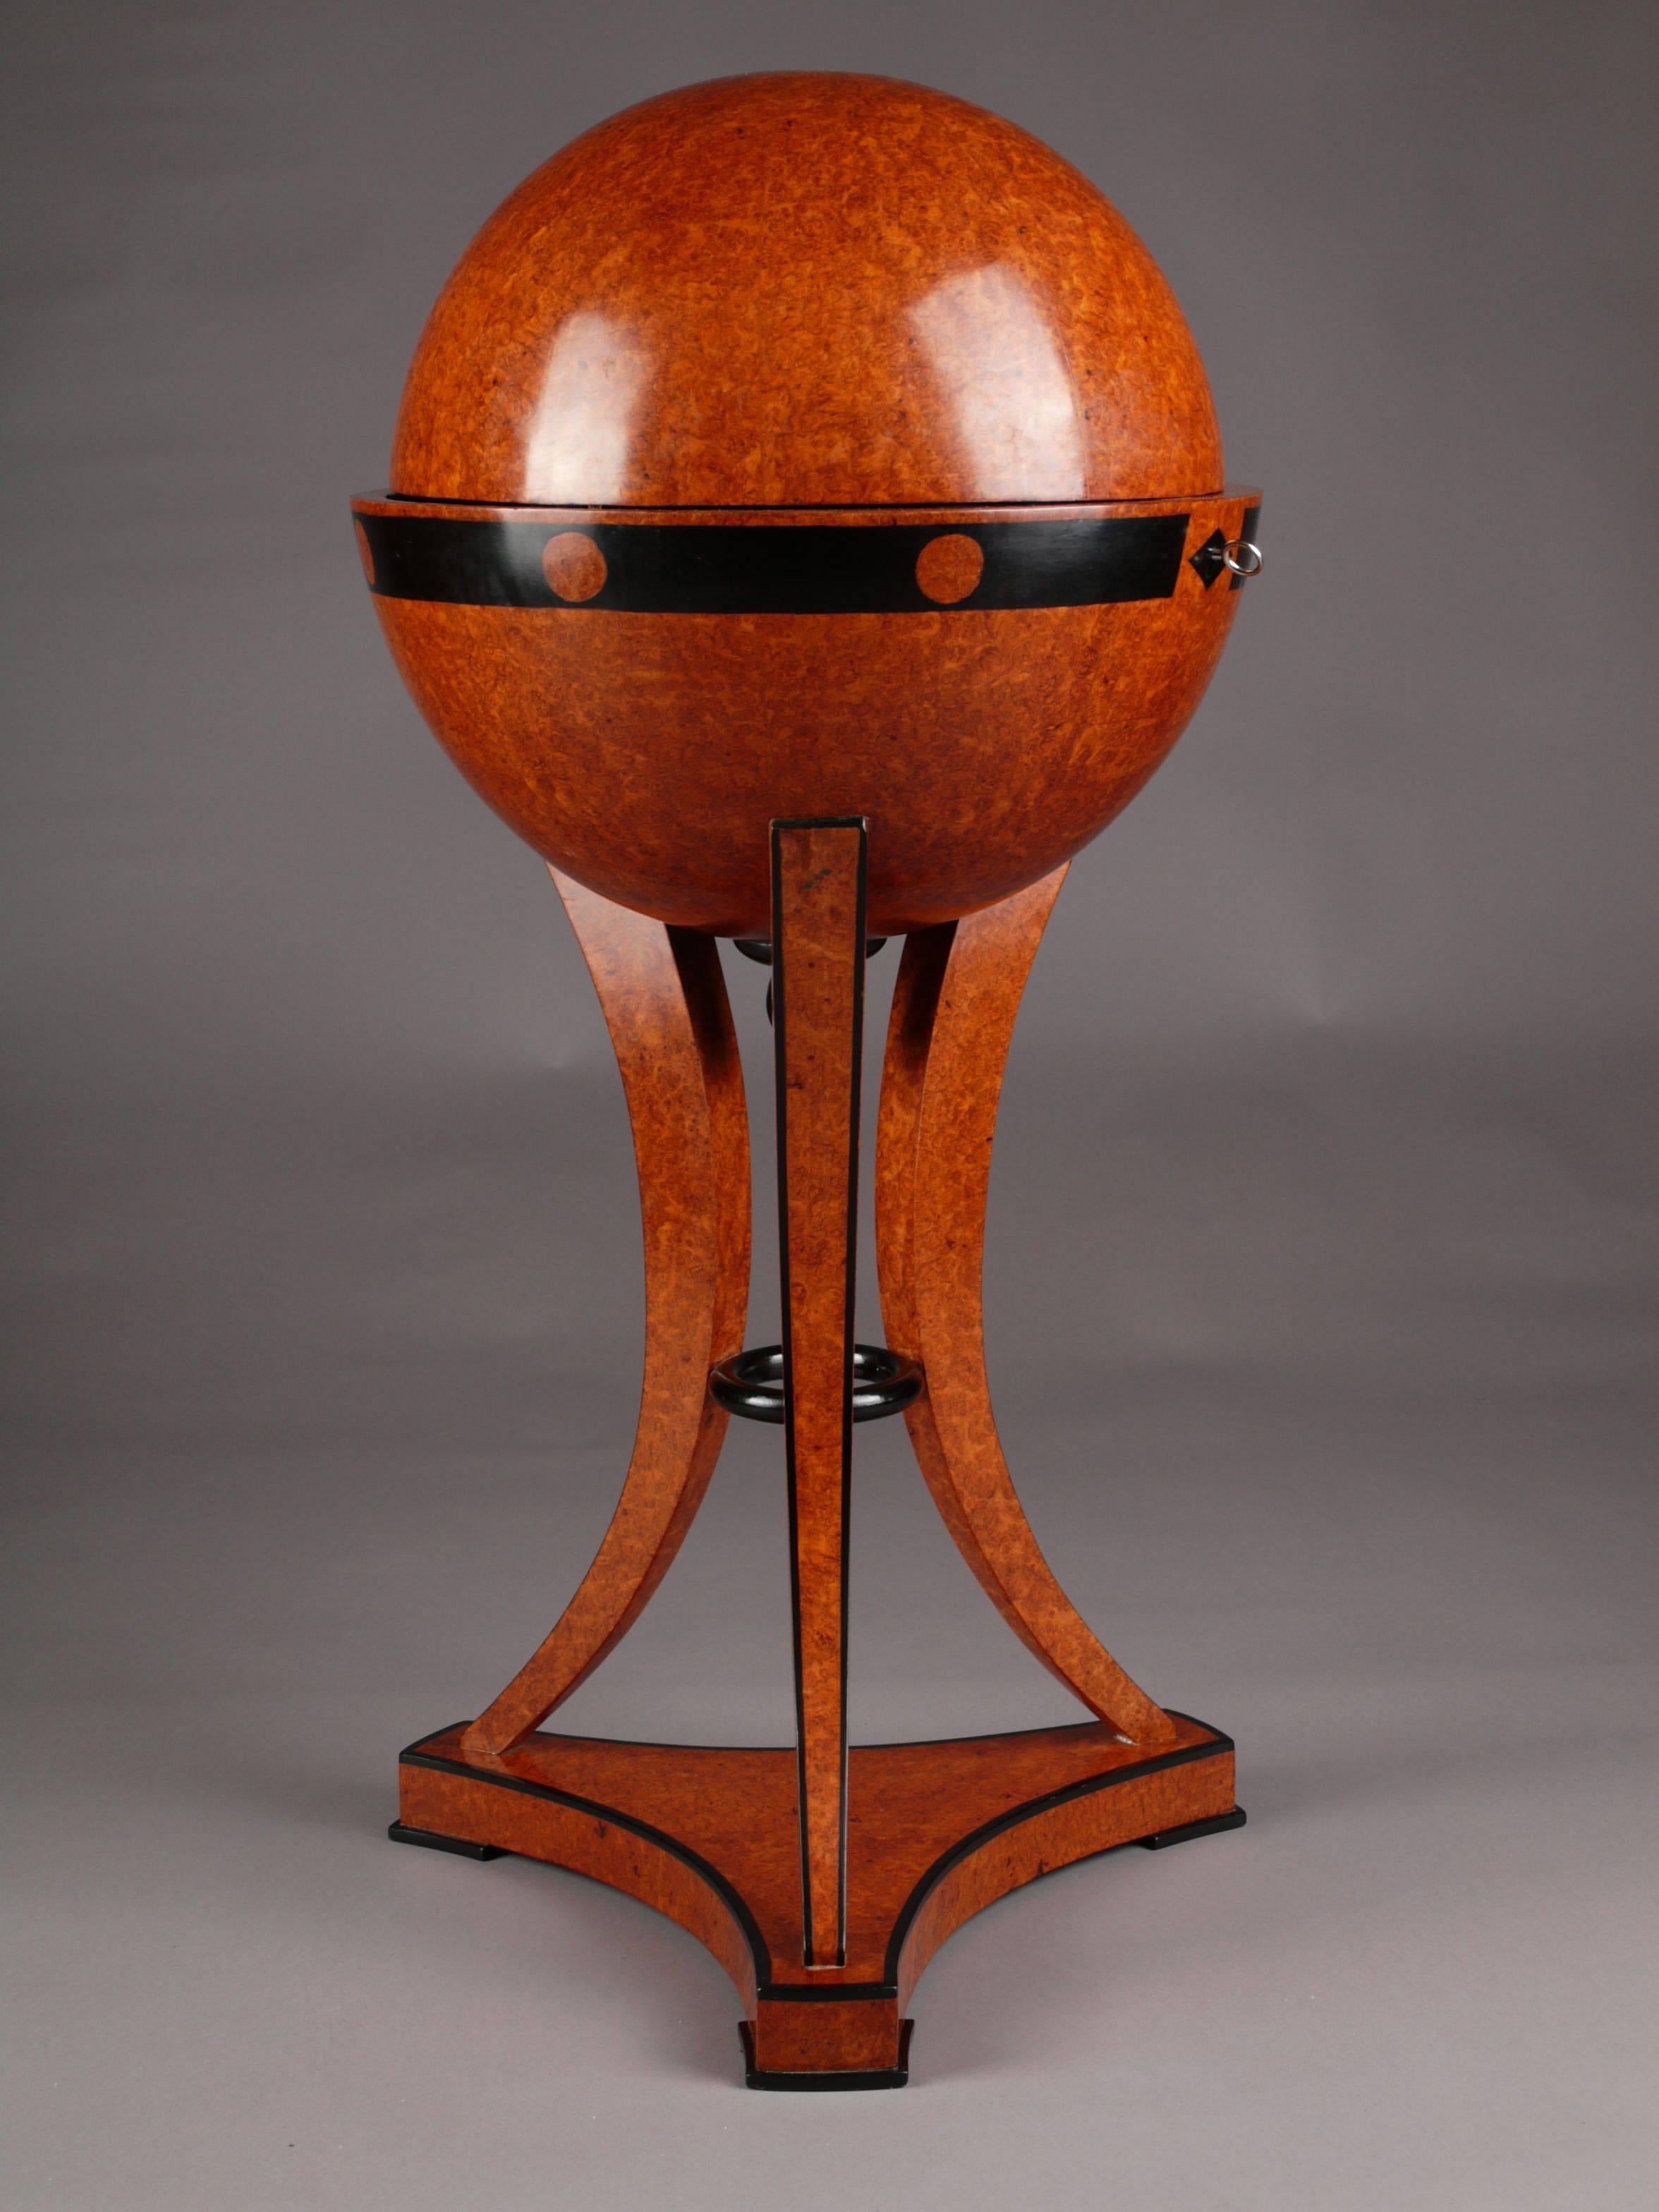 Mesa de coser globo terráqueo muy significativa de estilo Biedermeier vienés.
Chapa de raíz de arce ojo de pájaro sobre haya maciza, parcialmente ebonizada.

(G-Sam-44).